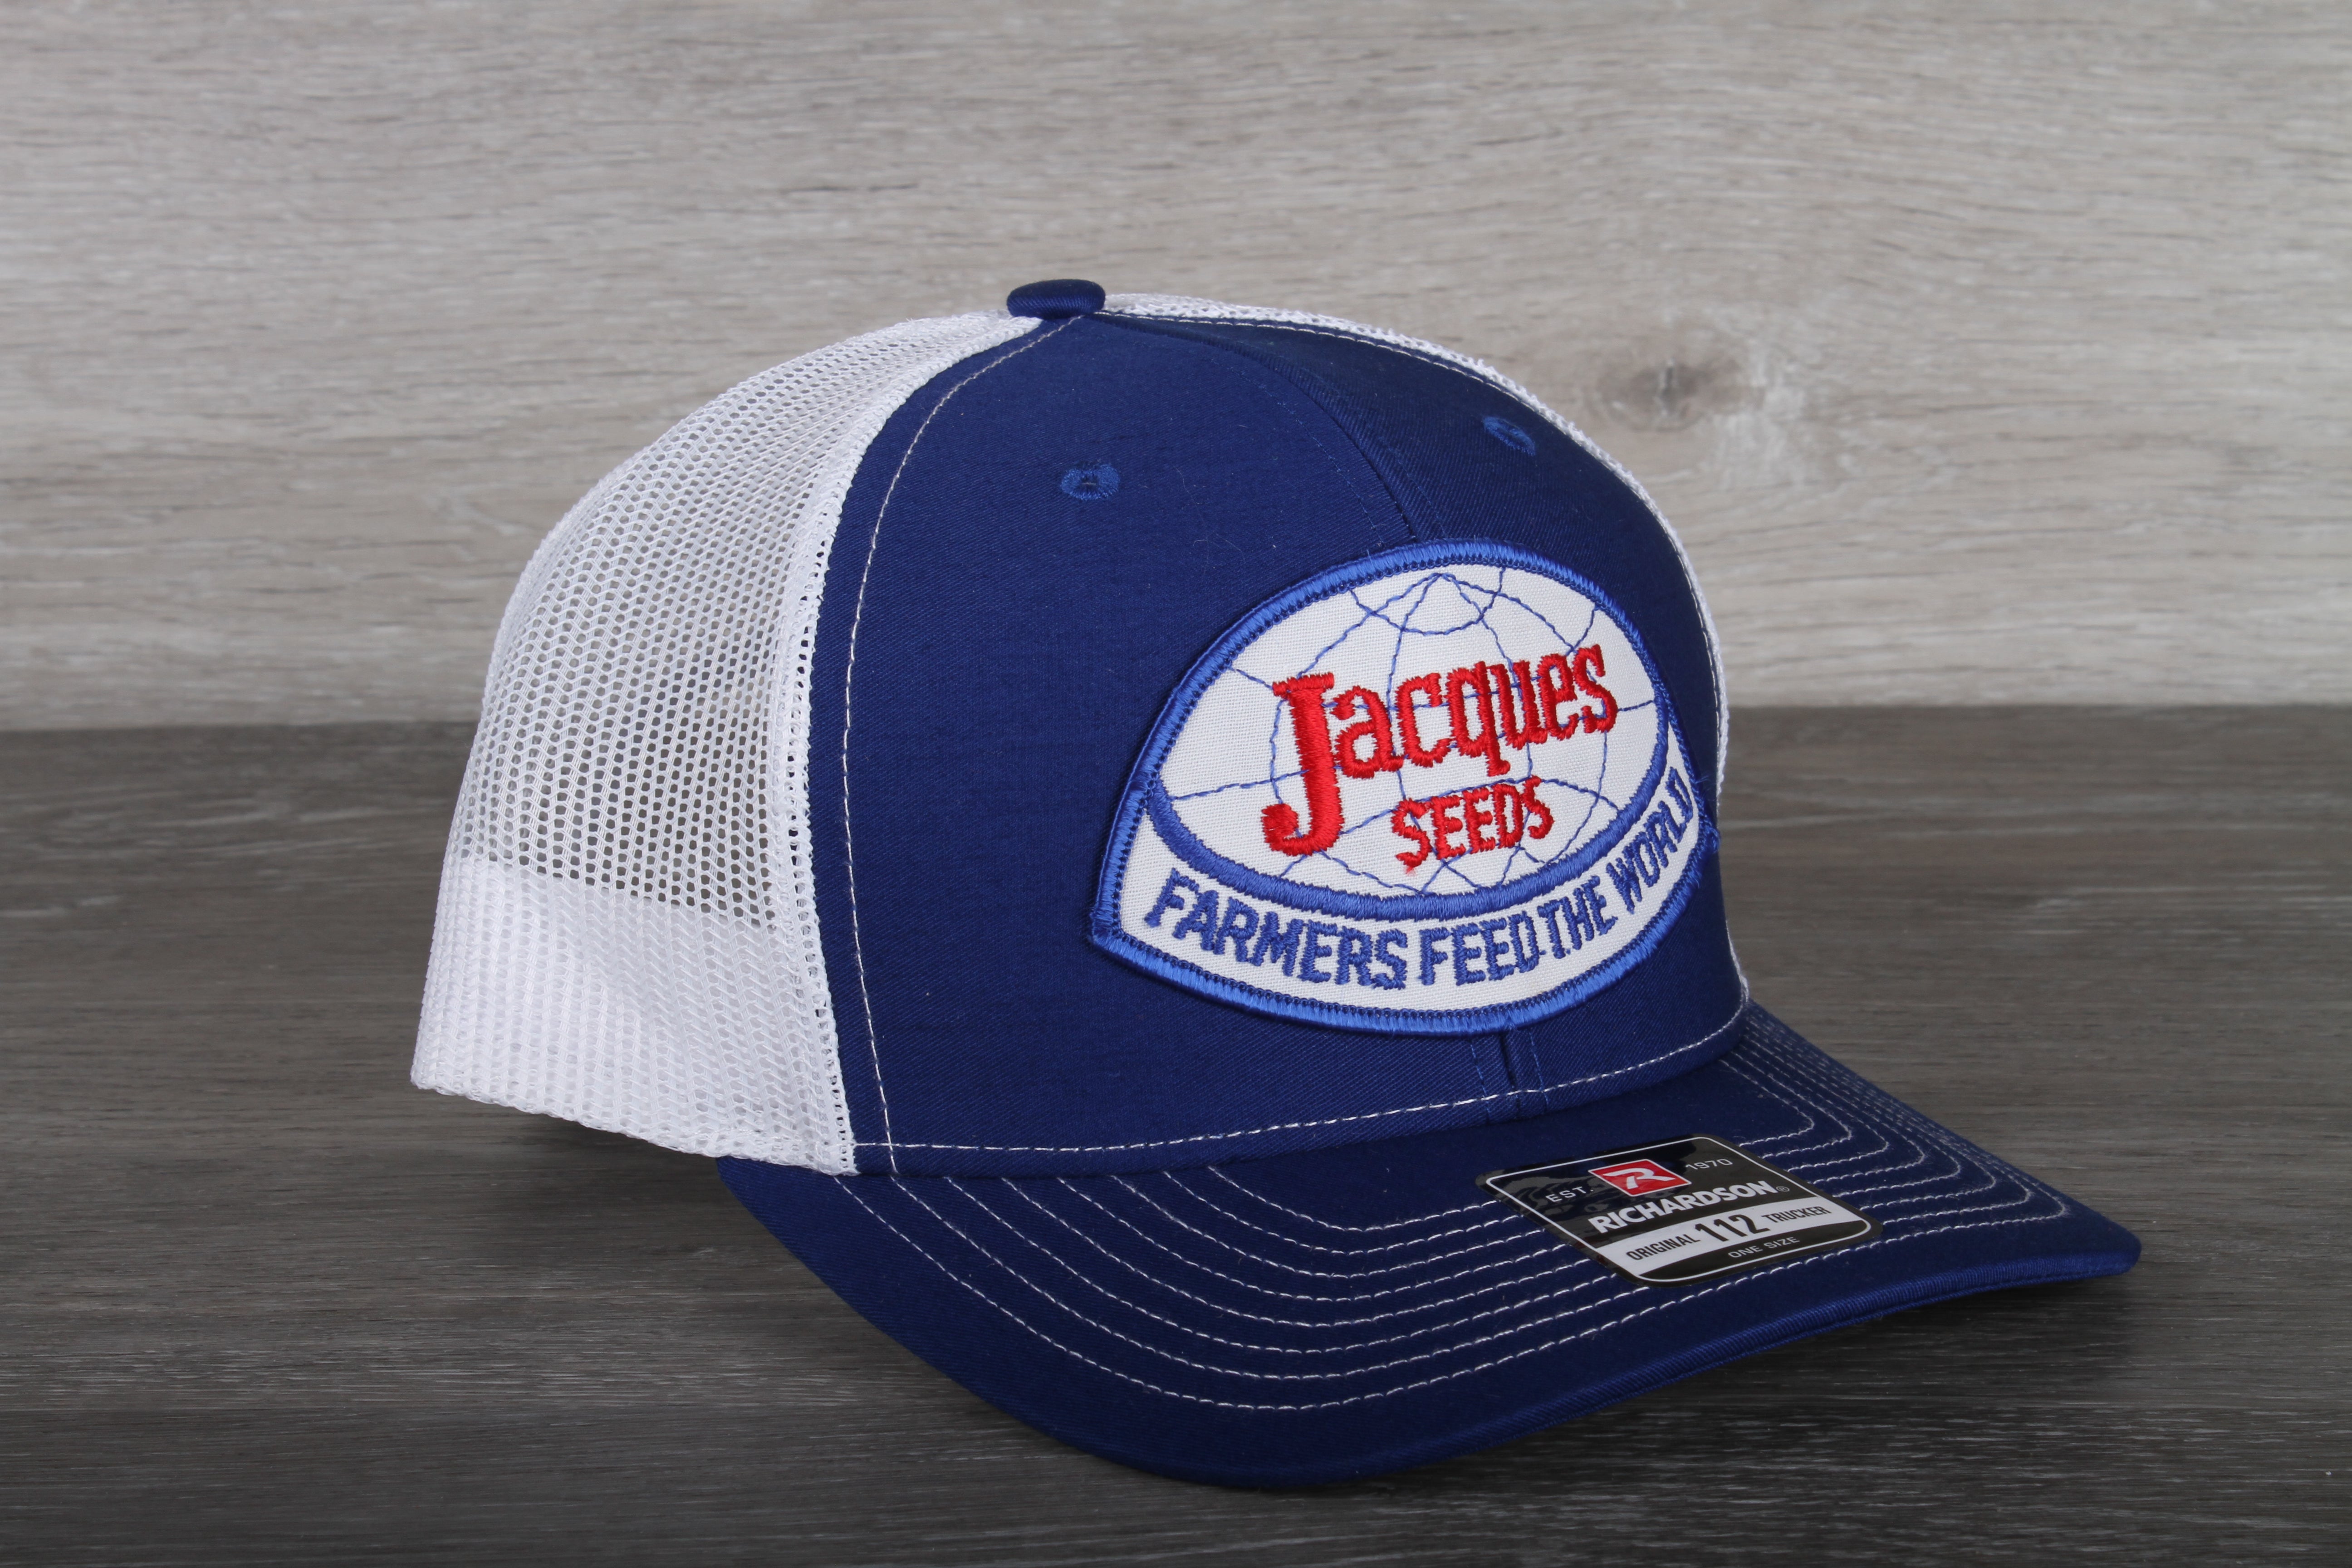 Vintage Jacques Seeds patch on a Richardson 112 trucker hat